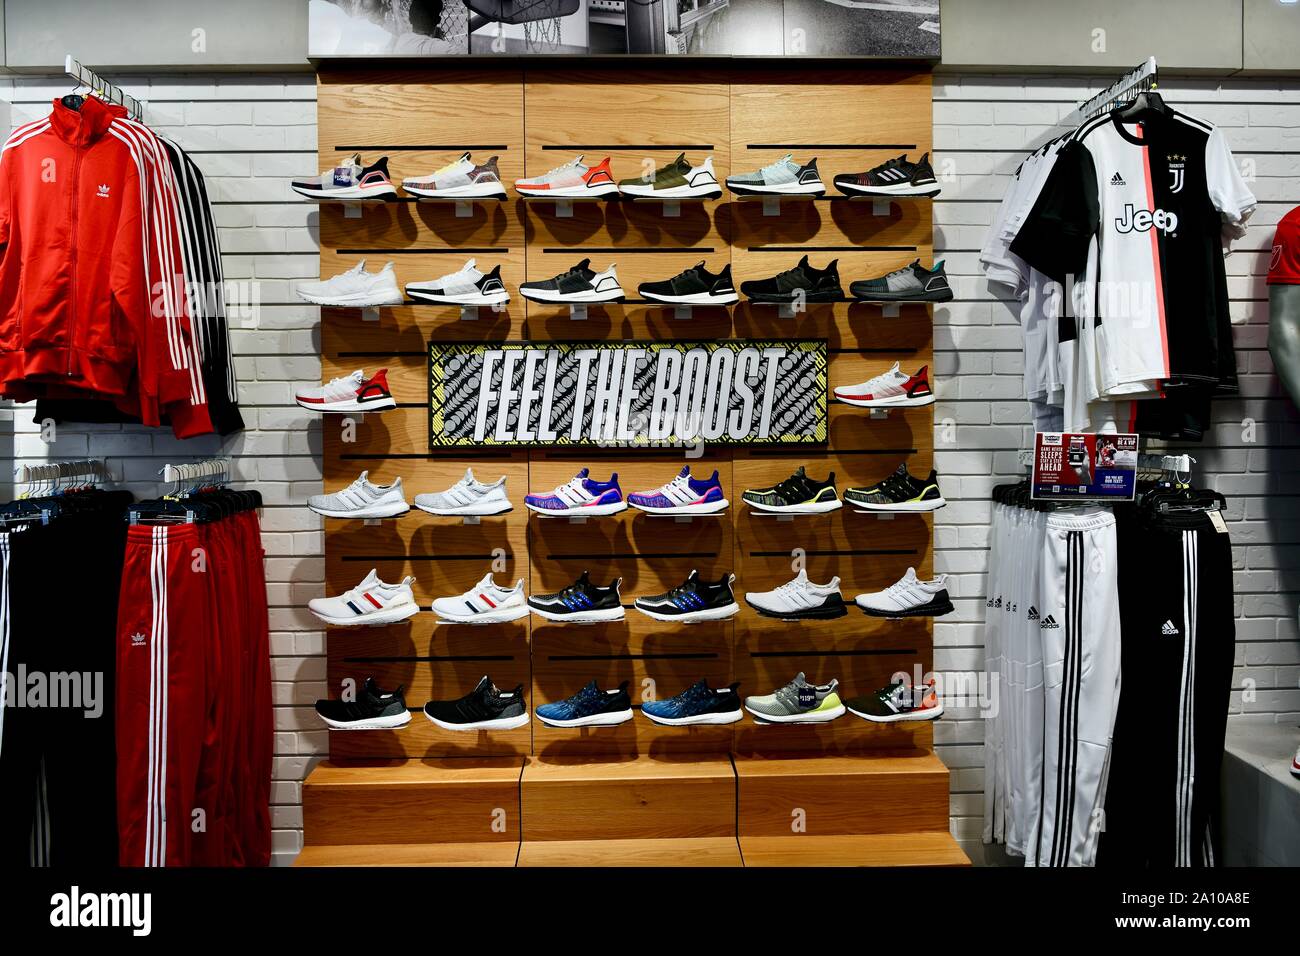 Adidas Schuhe in das Flaggschiff Adidas Store in New York City, USA  Stockfotografie - Alamy